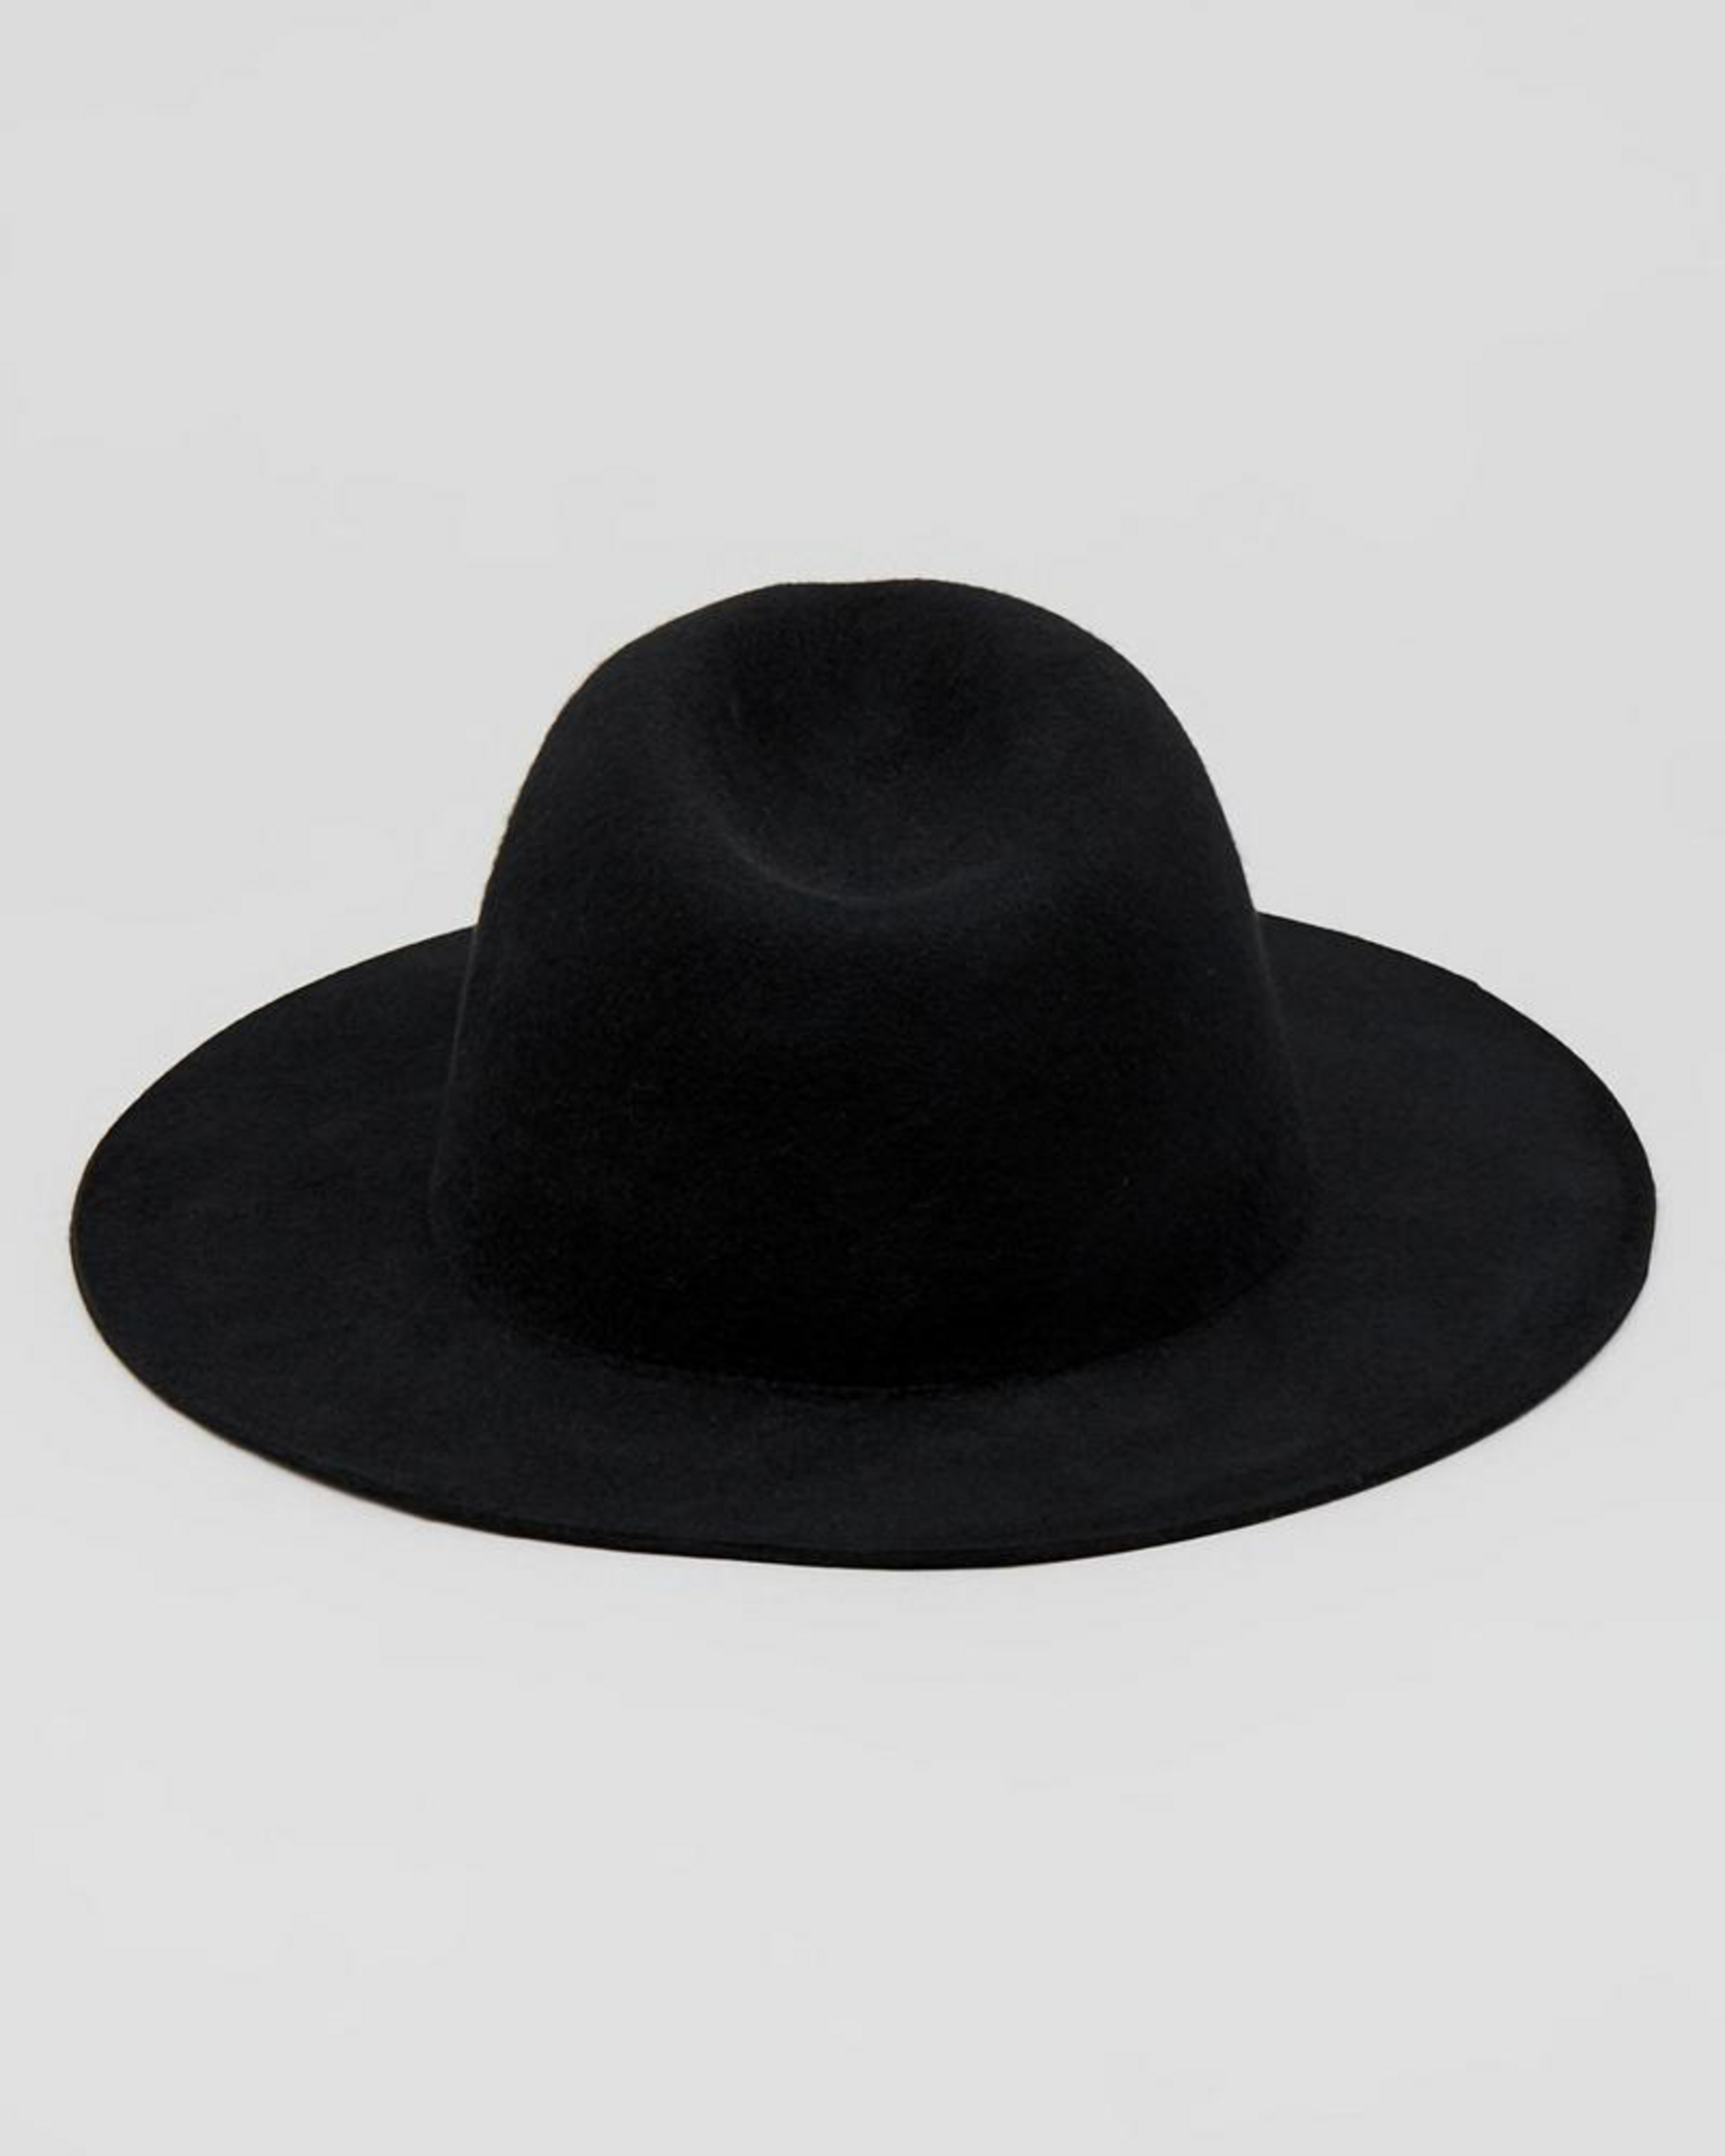 Rusty The Deane Felt Hat In Black - Fast Shipping & Easy Returns - City ...